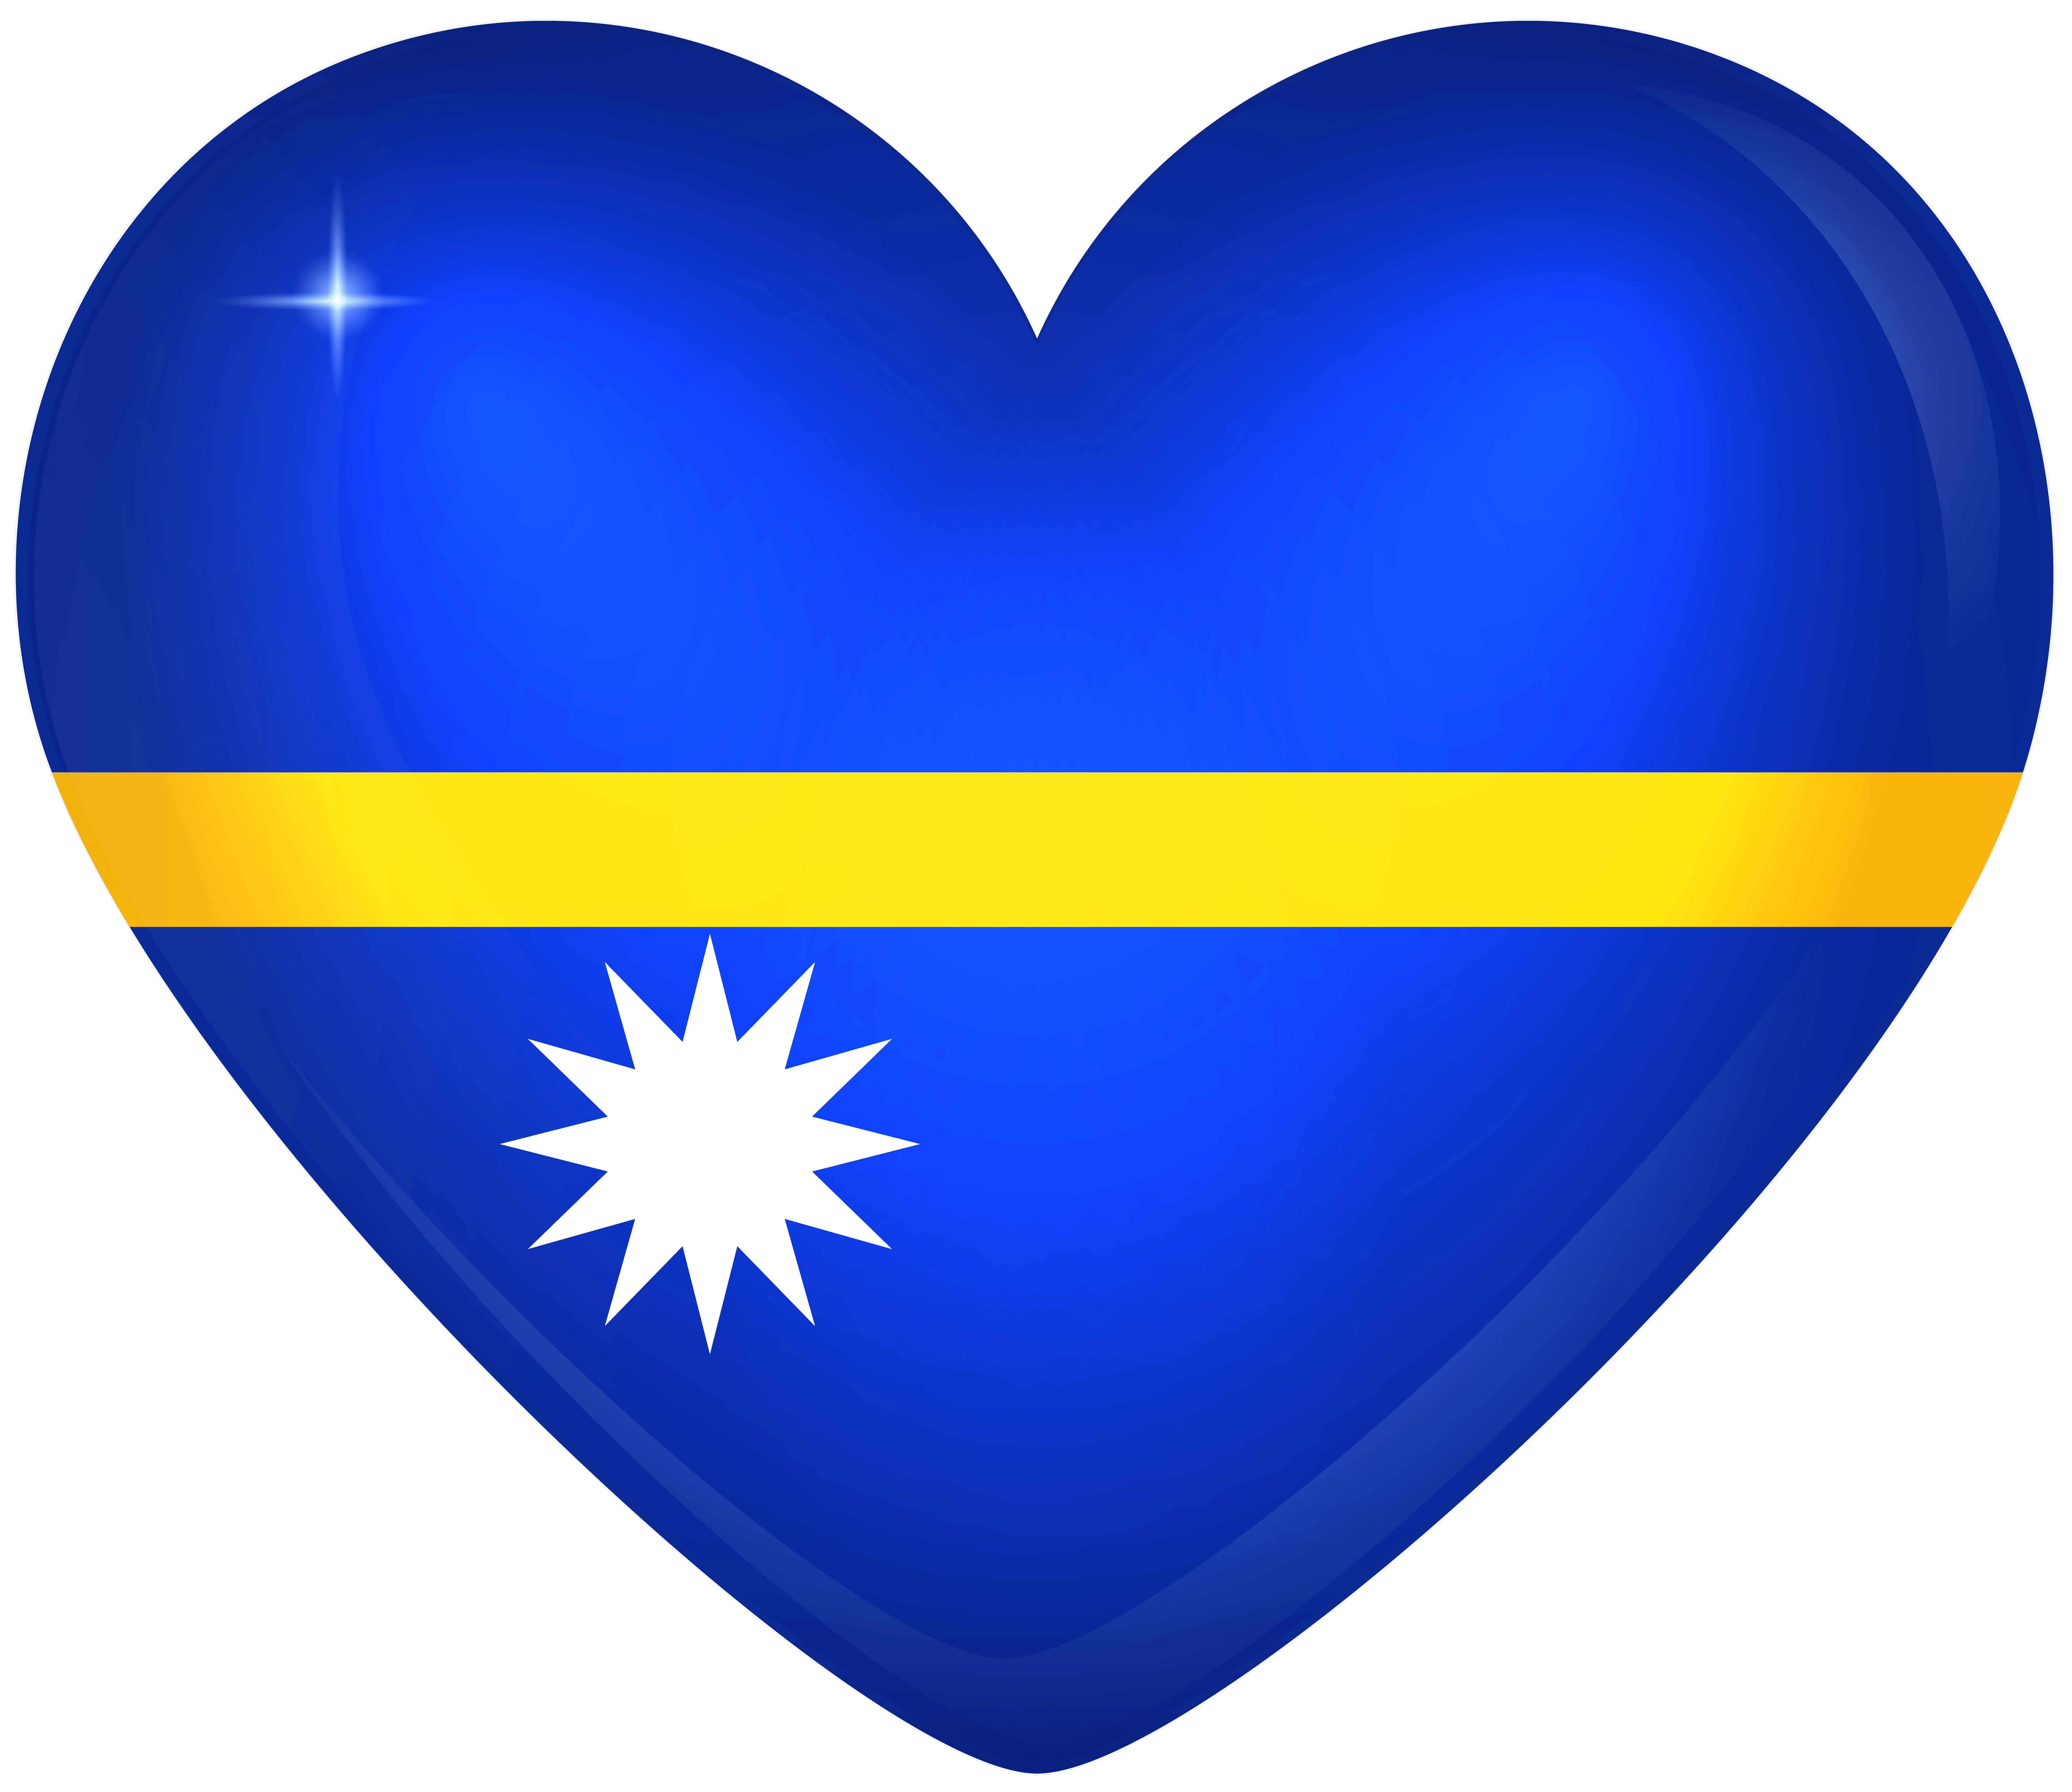 Nauru Large Heart Flag Quality Image